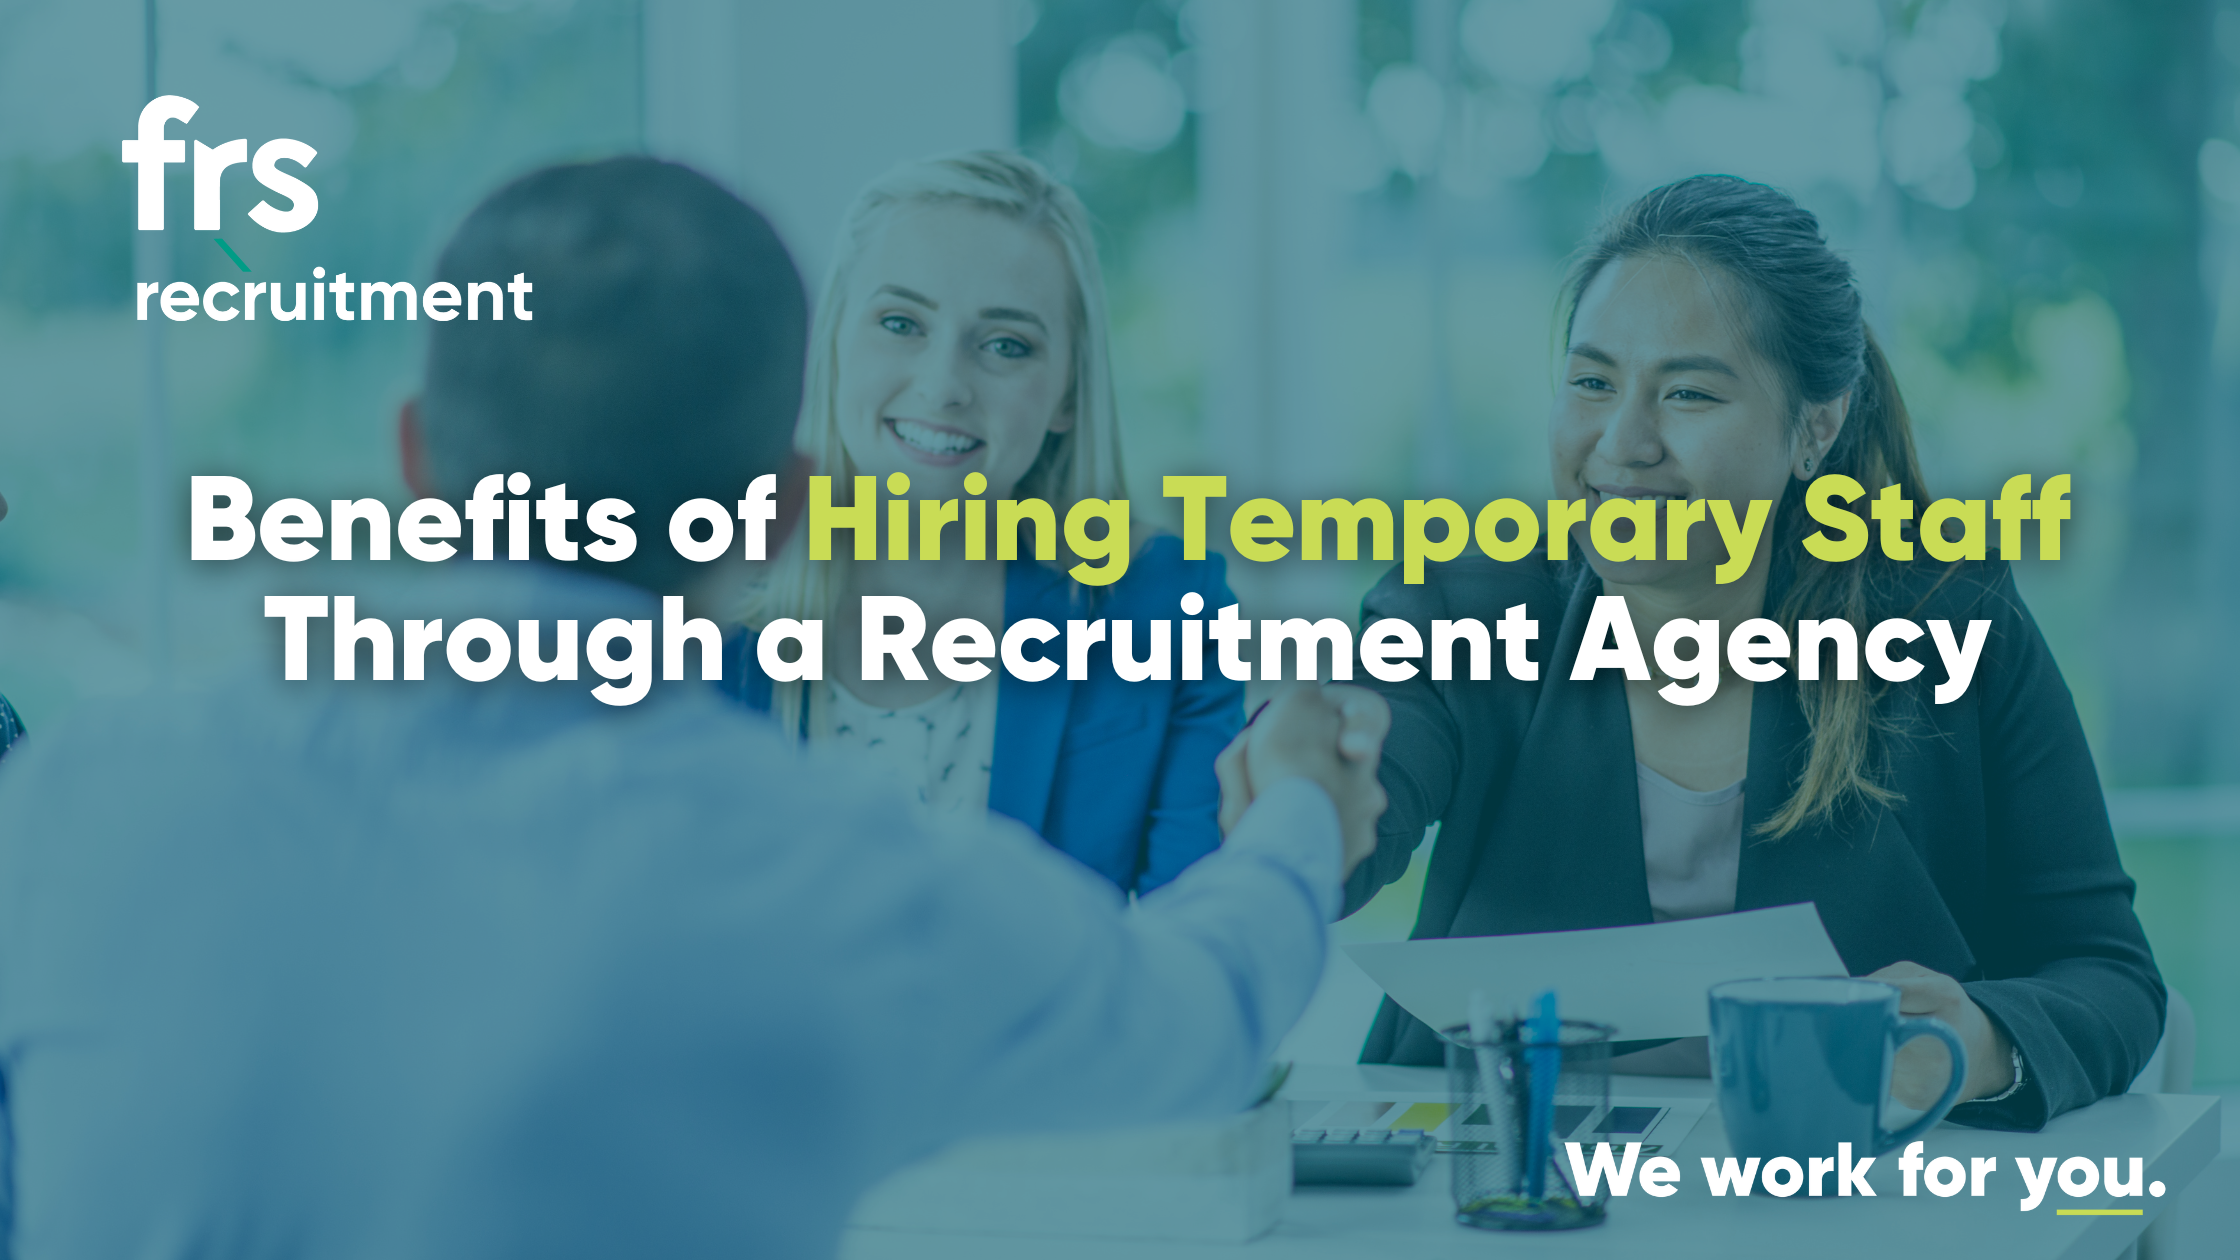 Benefits of Hiring Temporary Staff Through a Recruitment Agency